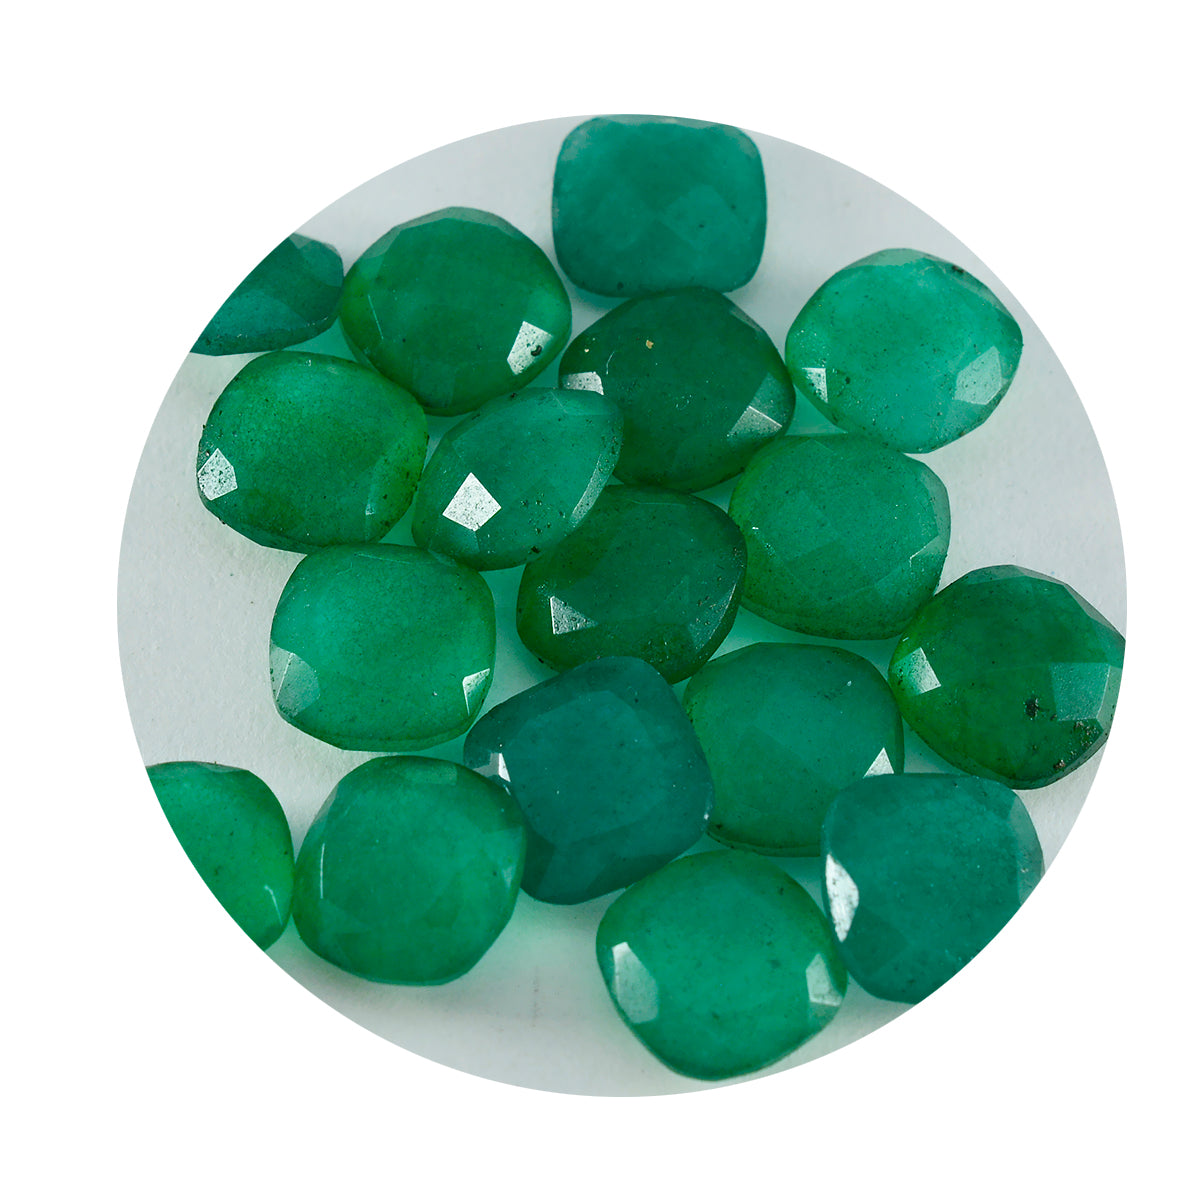 riyogems 1 шт., натуральная зеленая яшма, граненая 4x4 мм, форма подушки, качество A1, свободные драгоценные камни